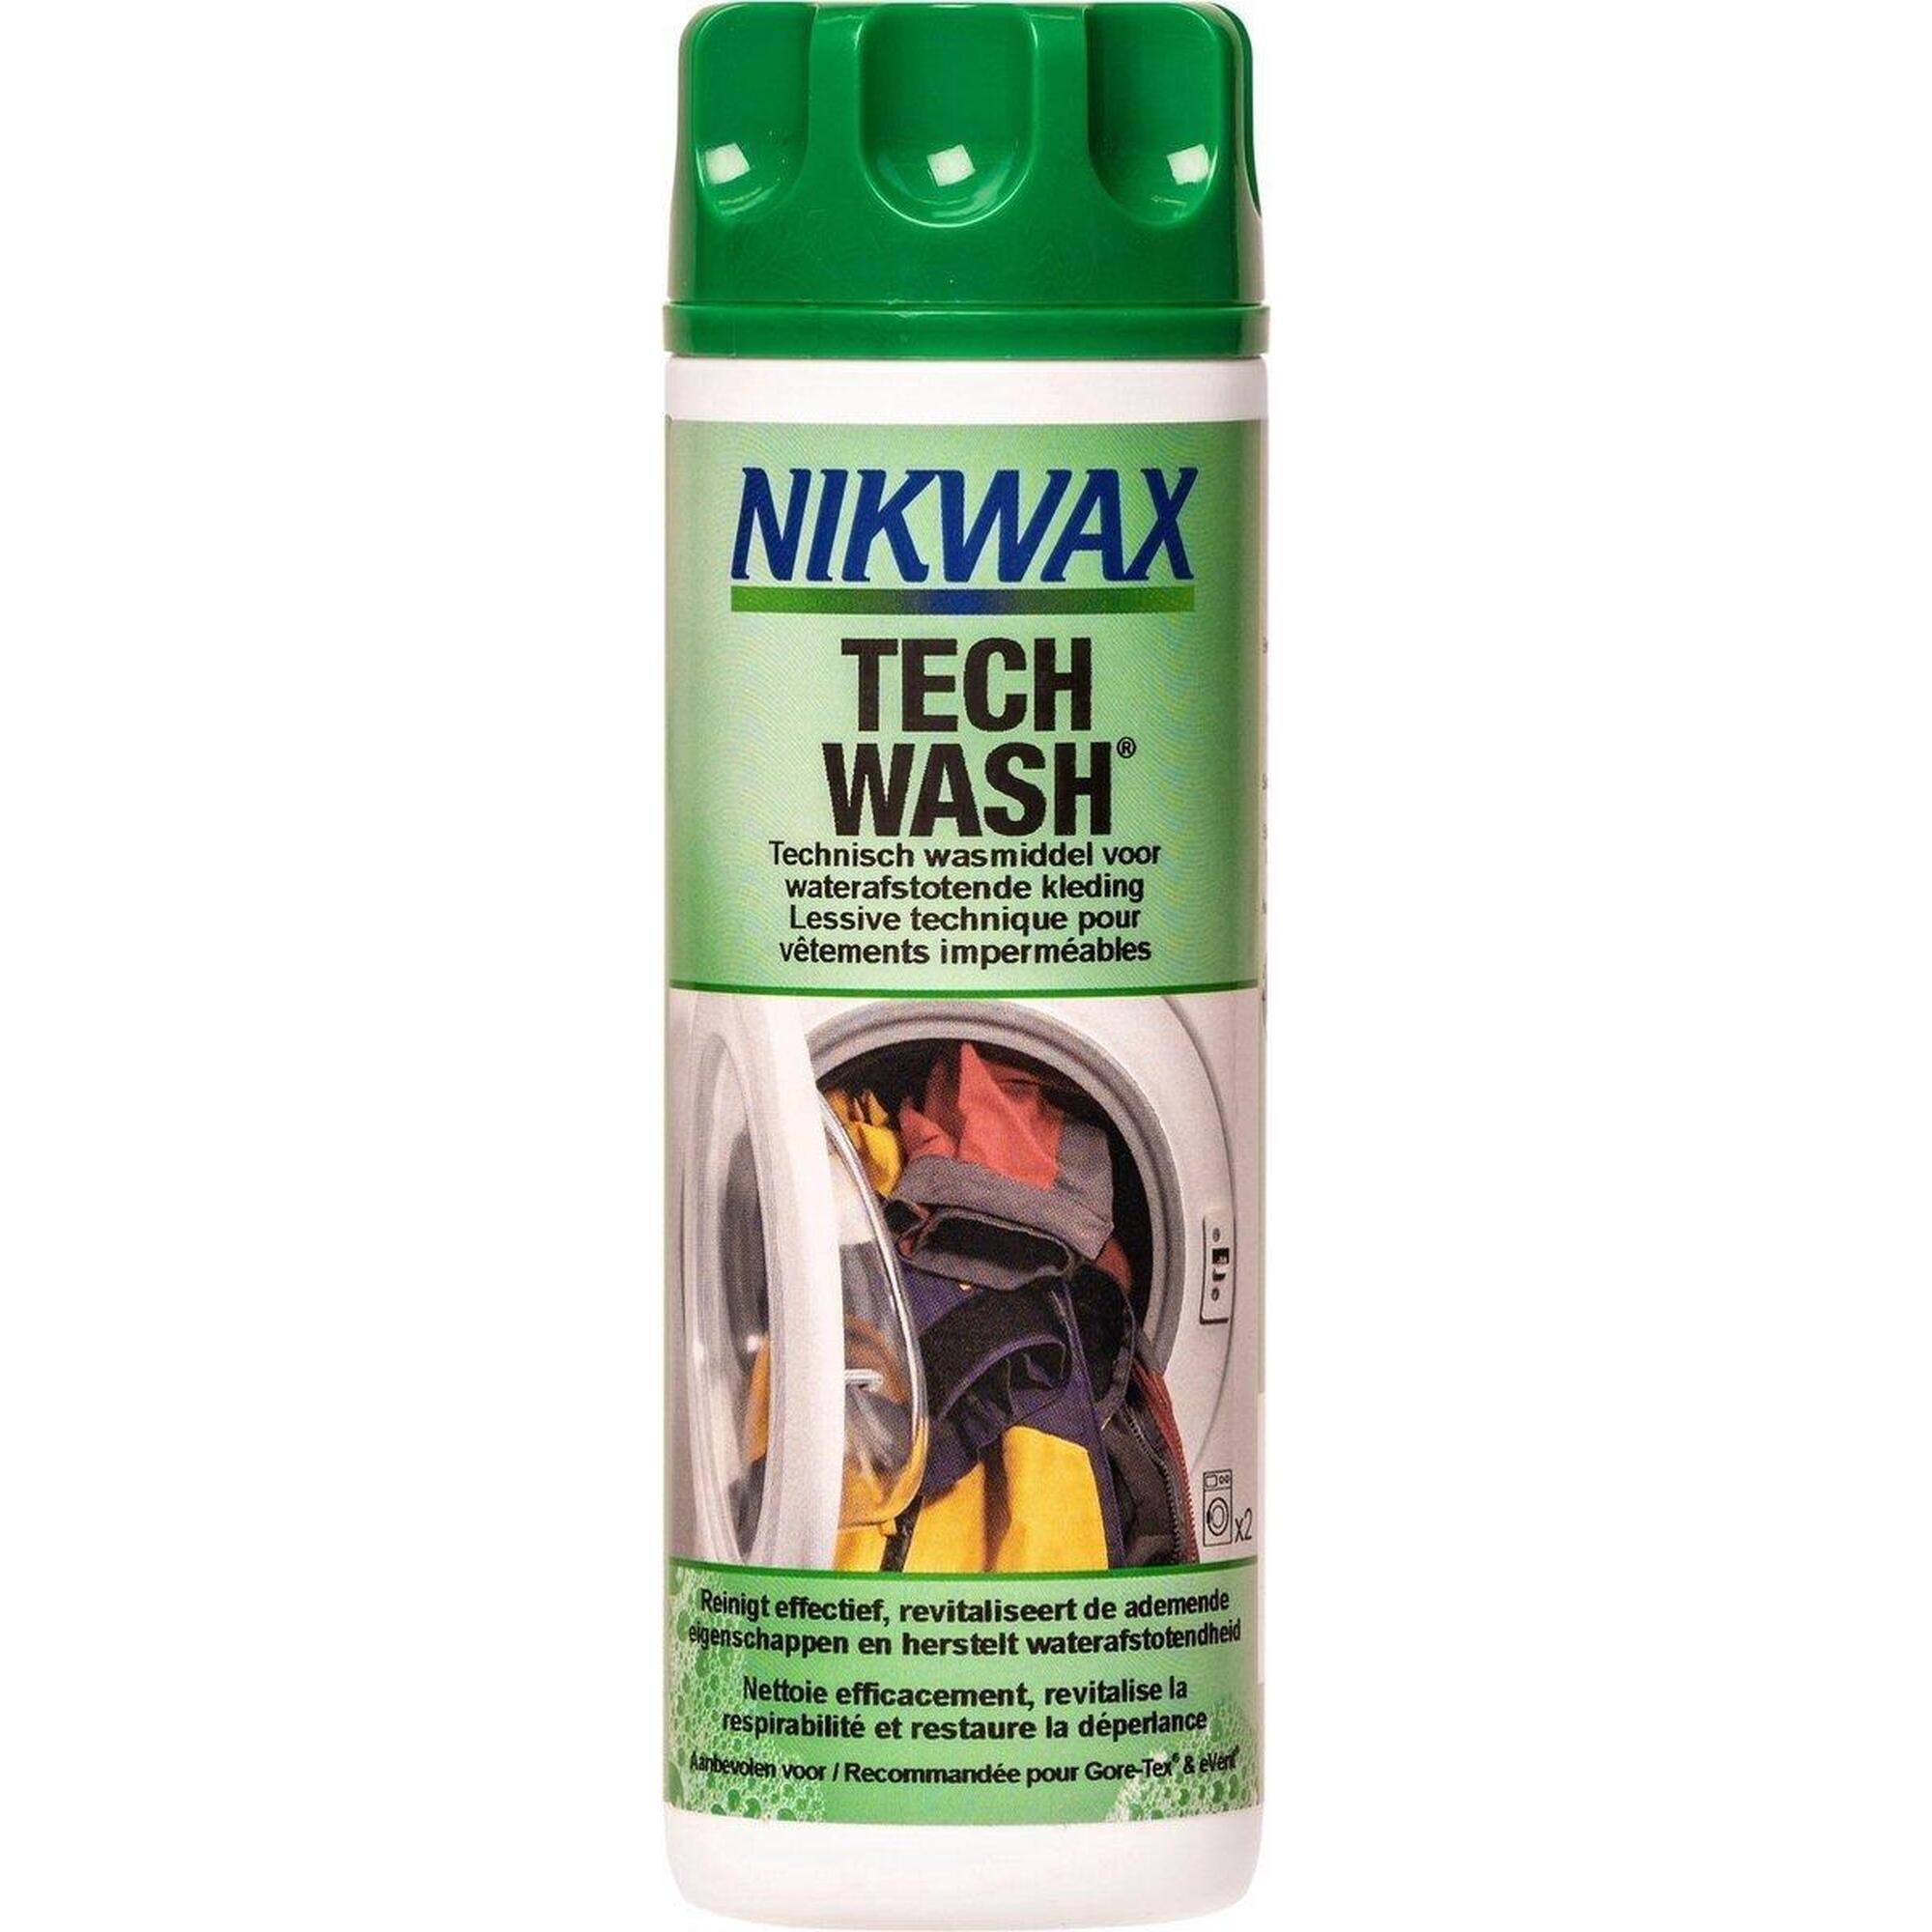 Kit de traitement imperméabilisant - 2x Tech Wash & Softshell Proof Spray-On